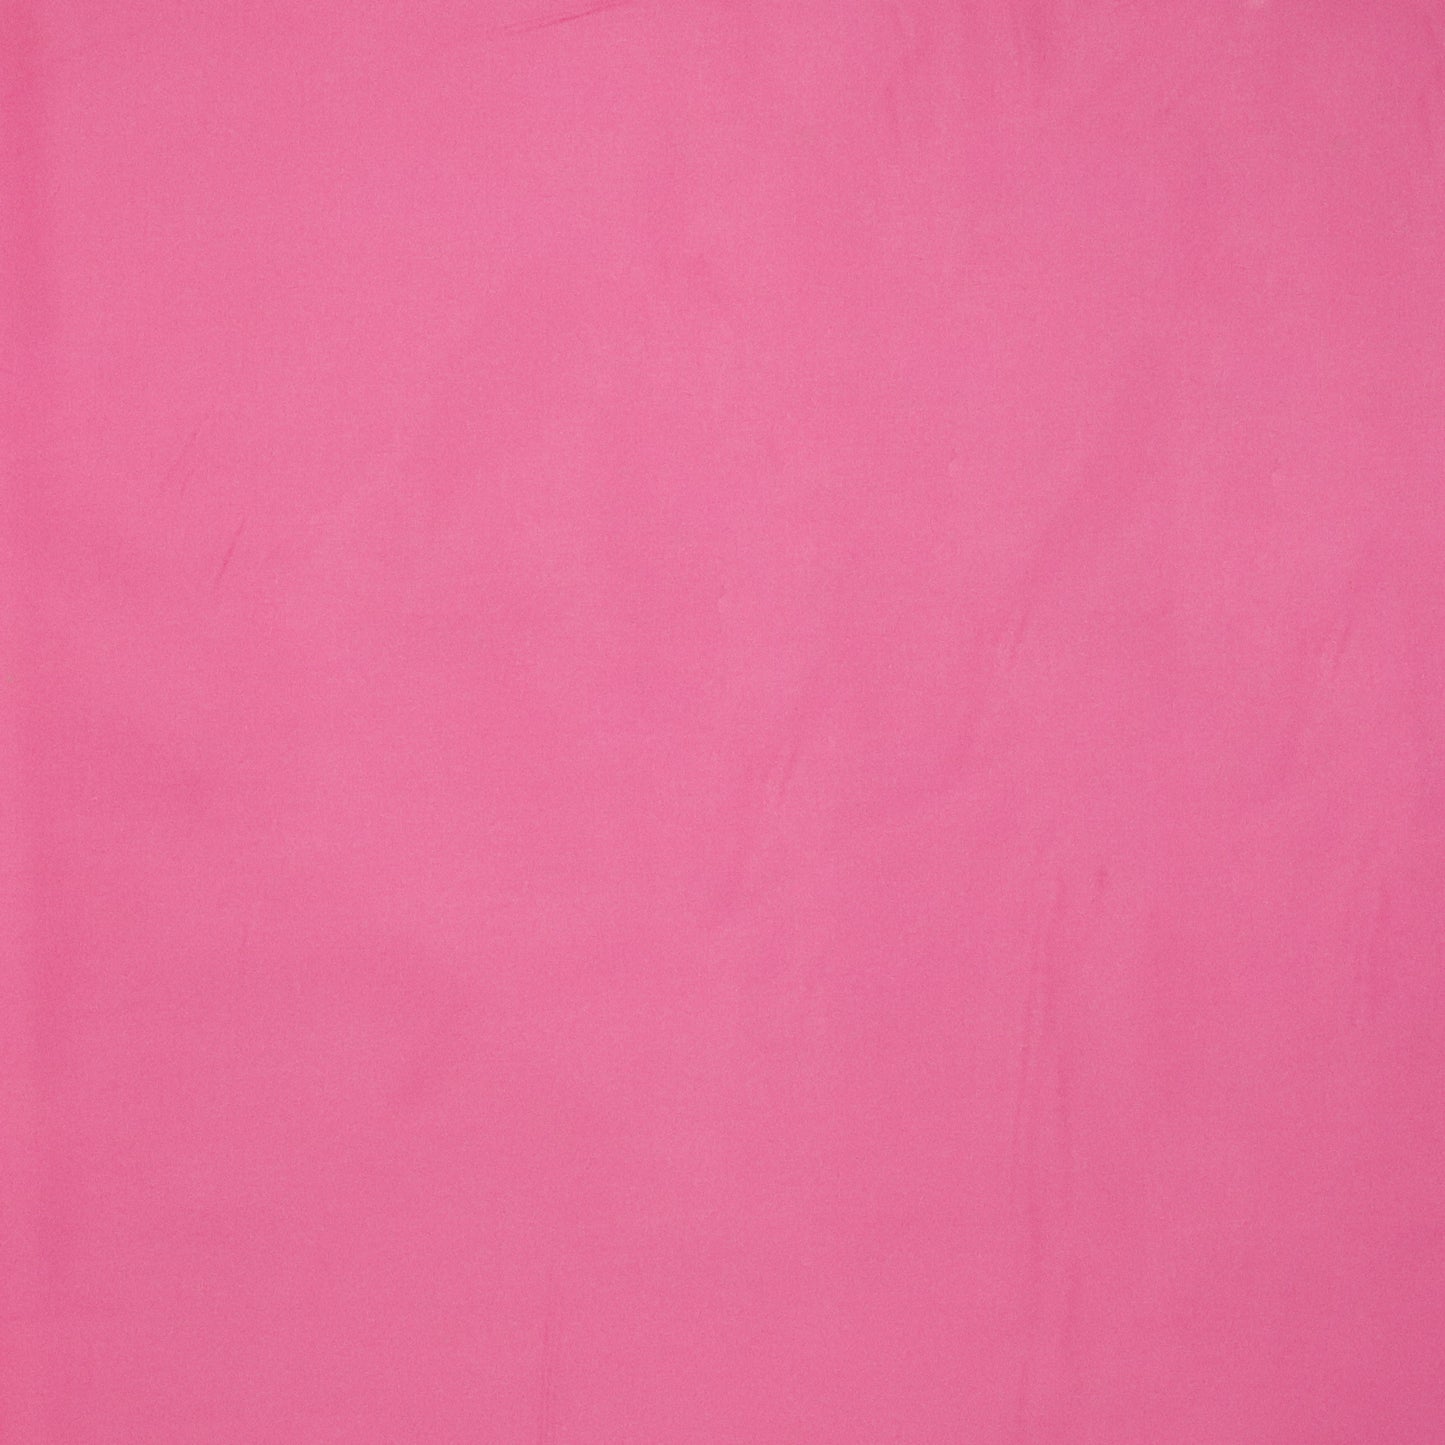 Devonstone Solids: Light Pink